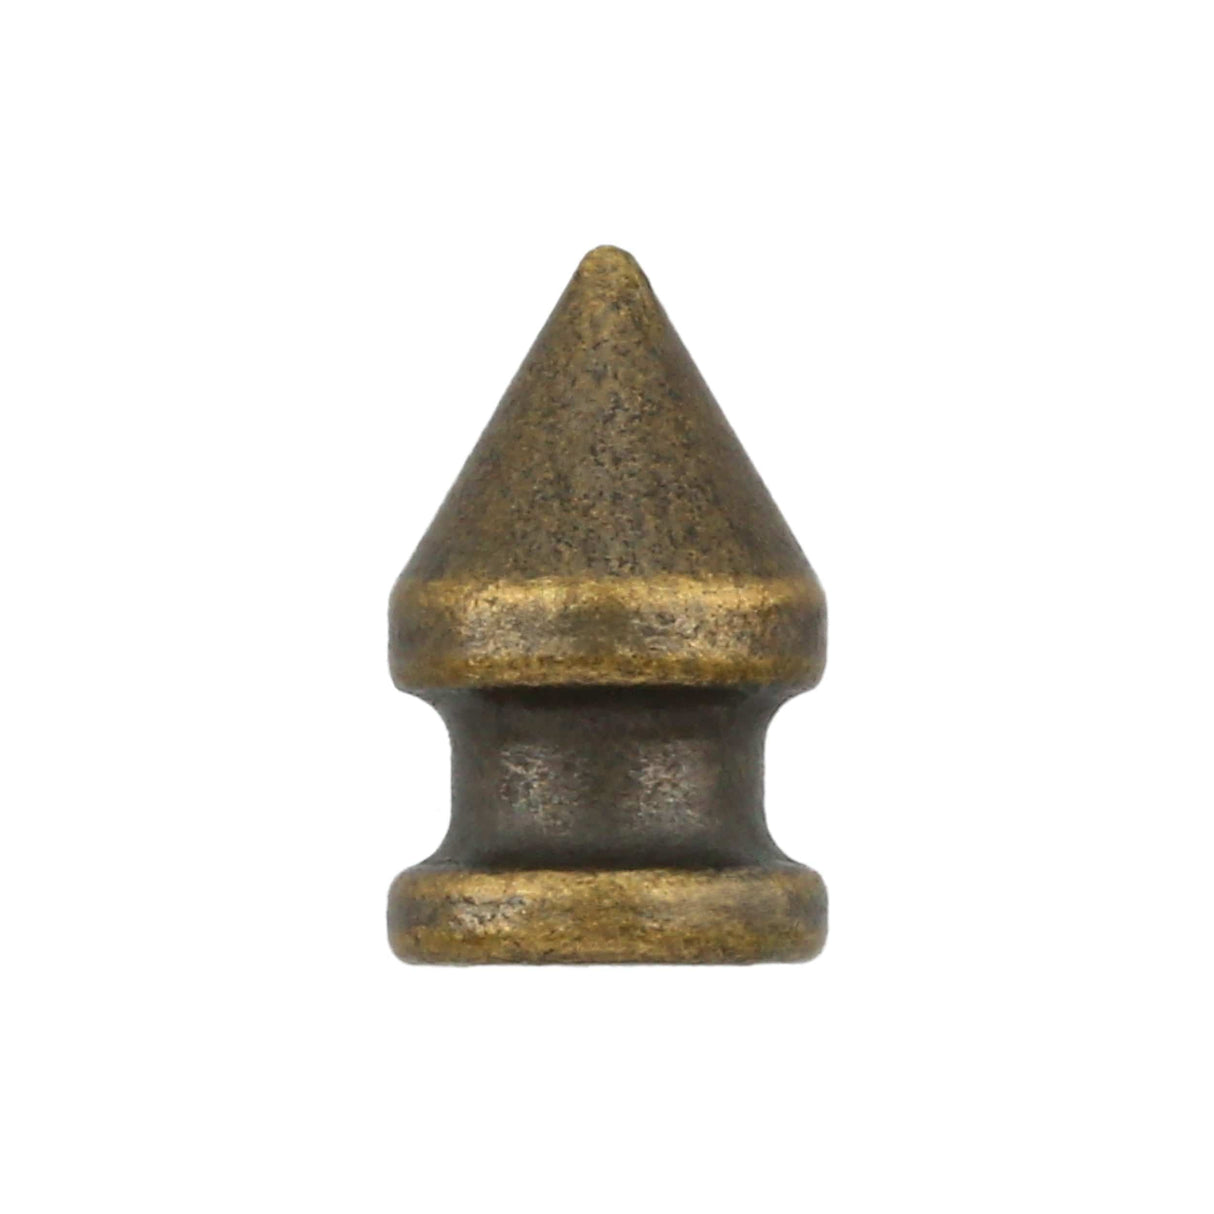 Ohio Travel Bag 8mm Antique Brass, Spike, Zinc Alloy, #C-1167-ANTB C-1167-ANTB